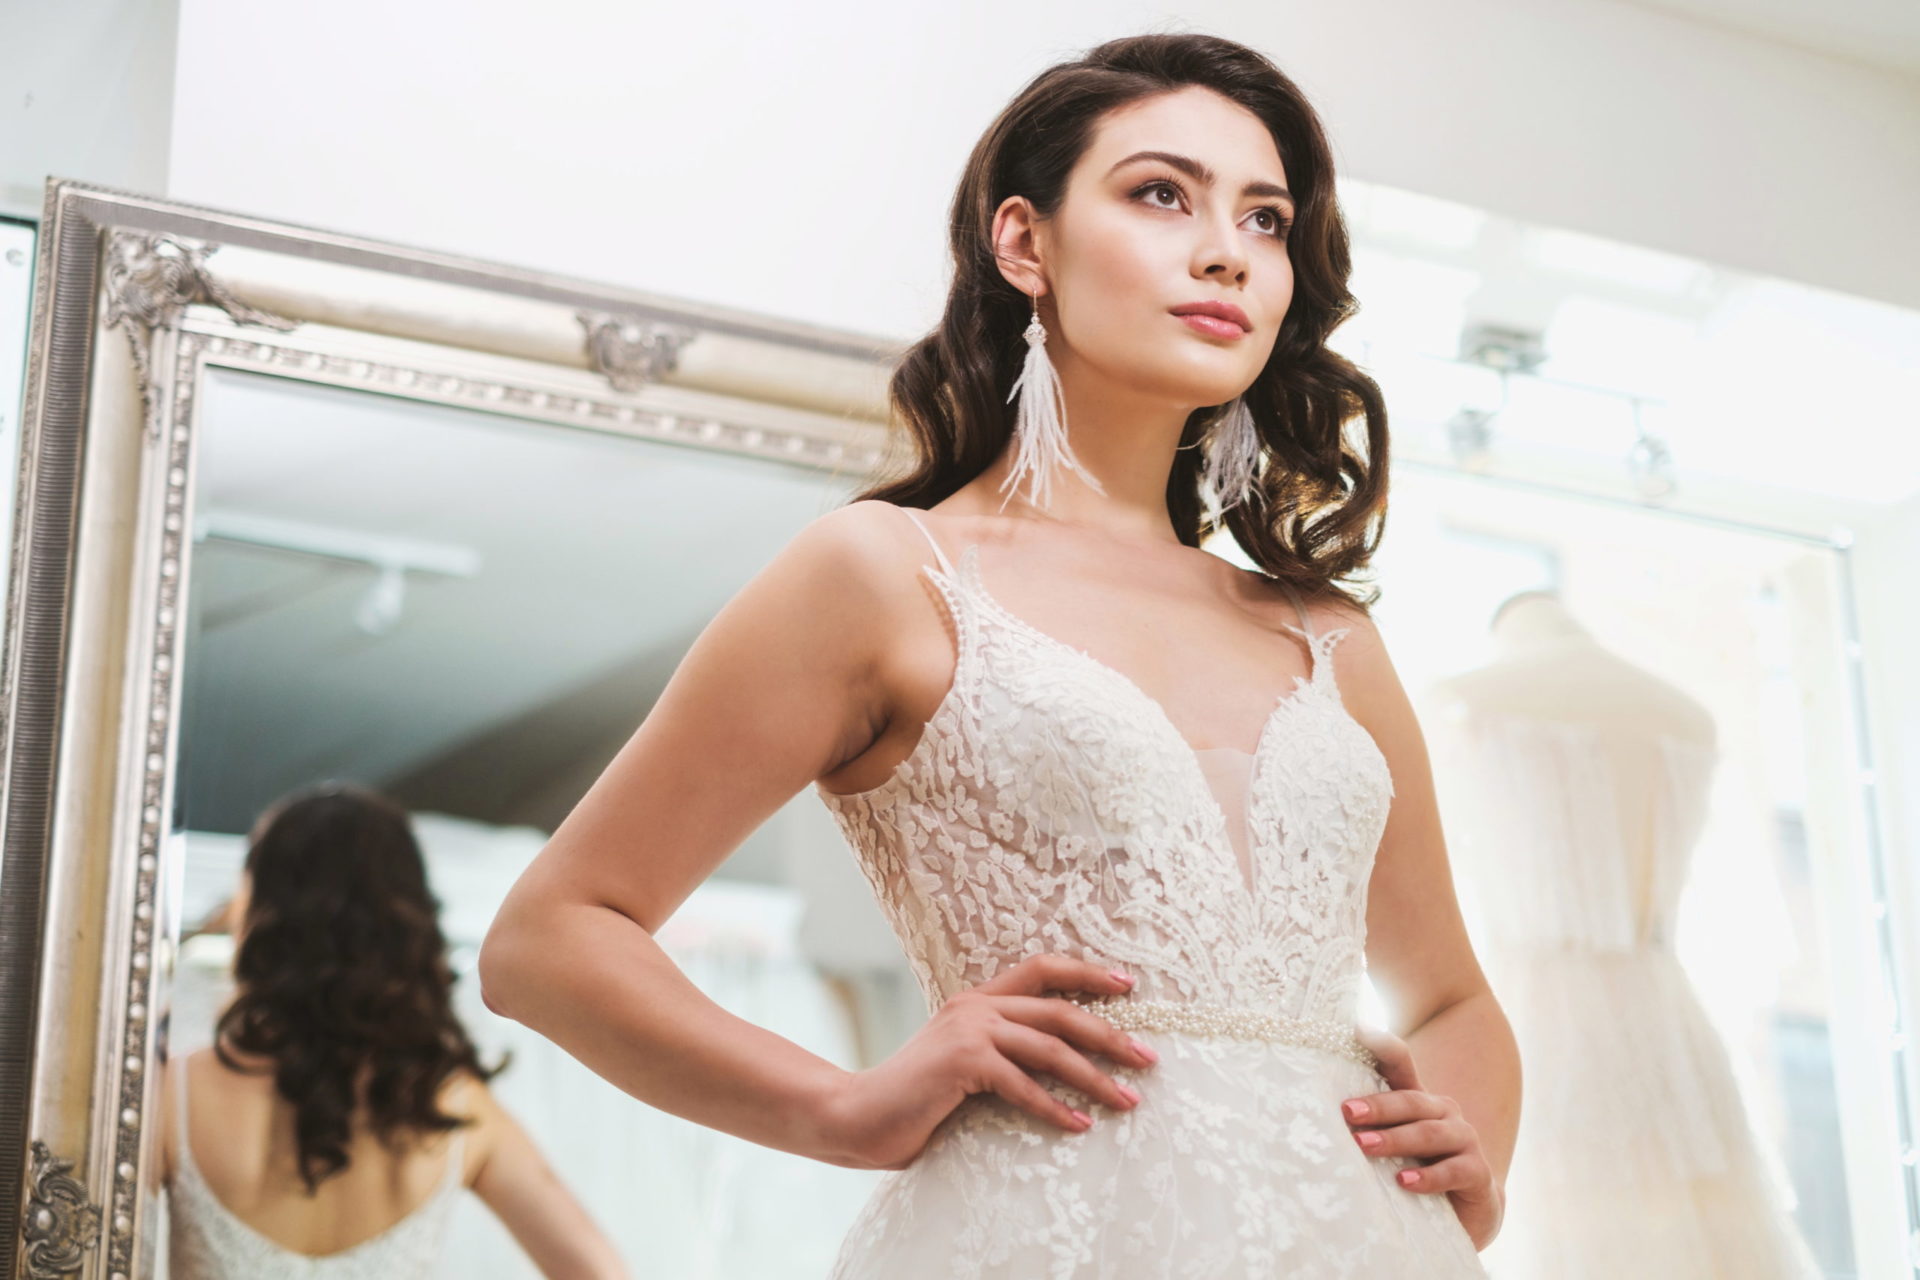 Pop-Up Bridal Wedding Dress Sales in GTA & Central Ontario